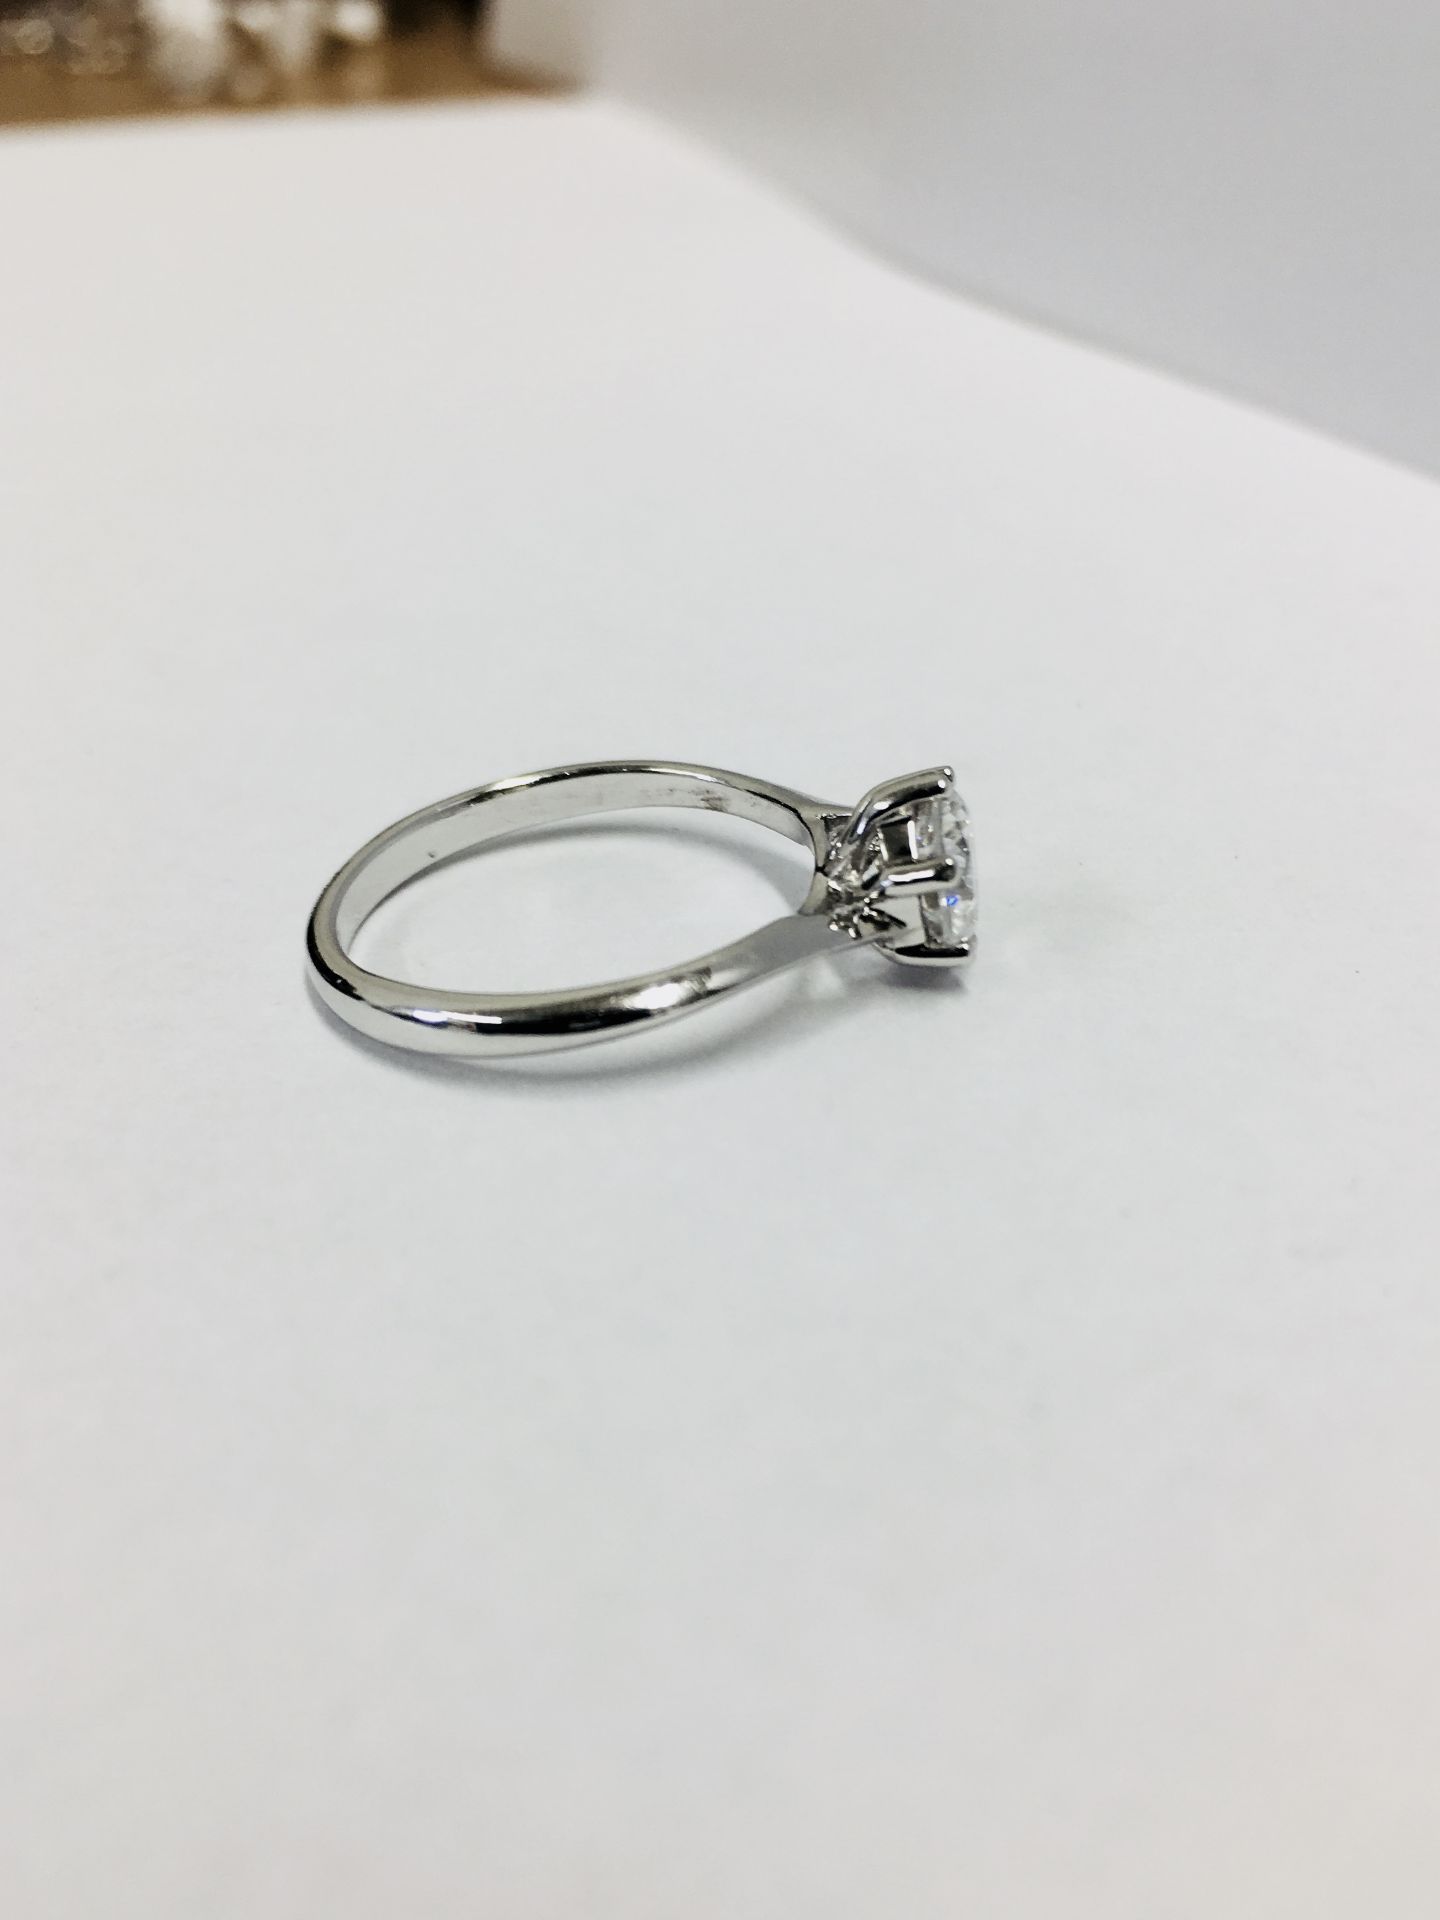 Platinum 6 claw twist diamond solitaire ring,0.50ct brilliant cut diamond h colour vs clarity ( - Image 6 of 6